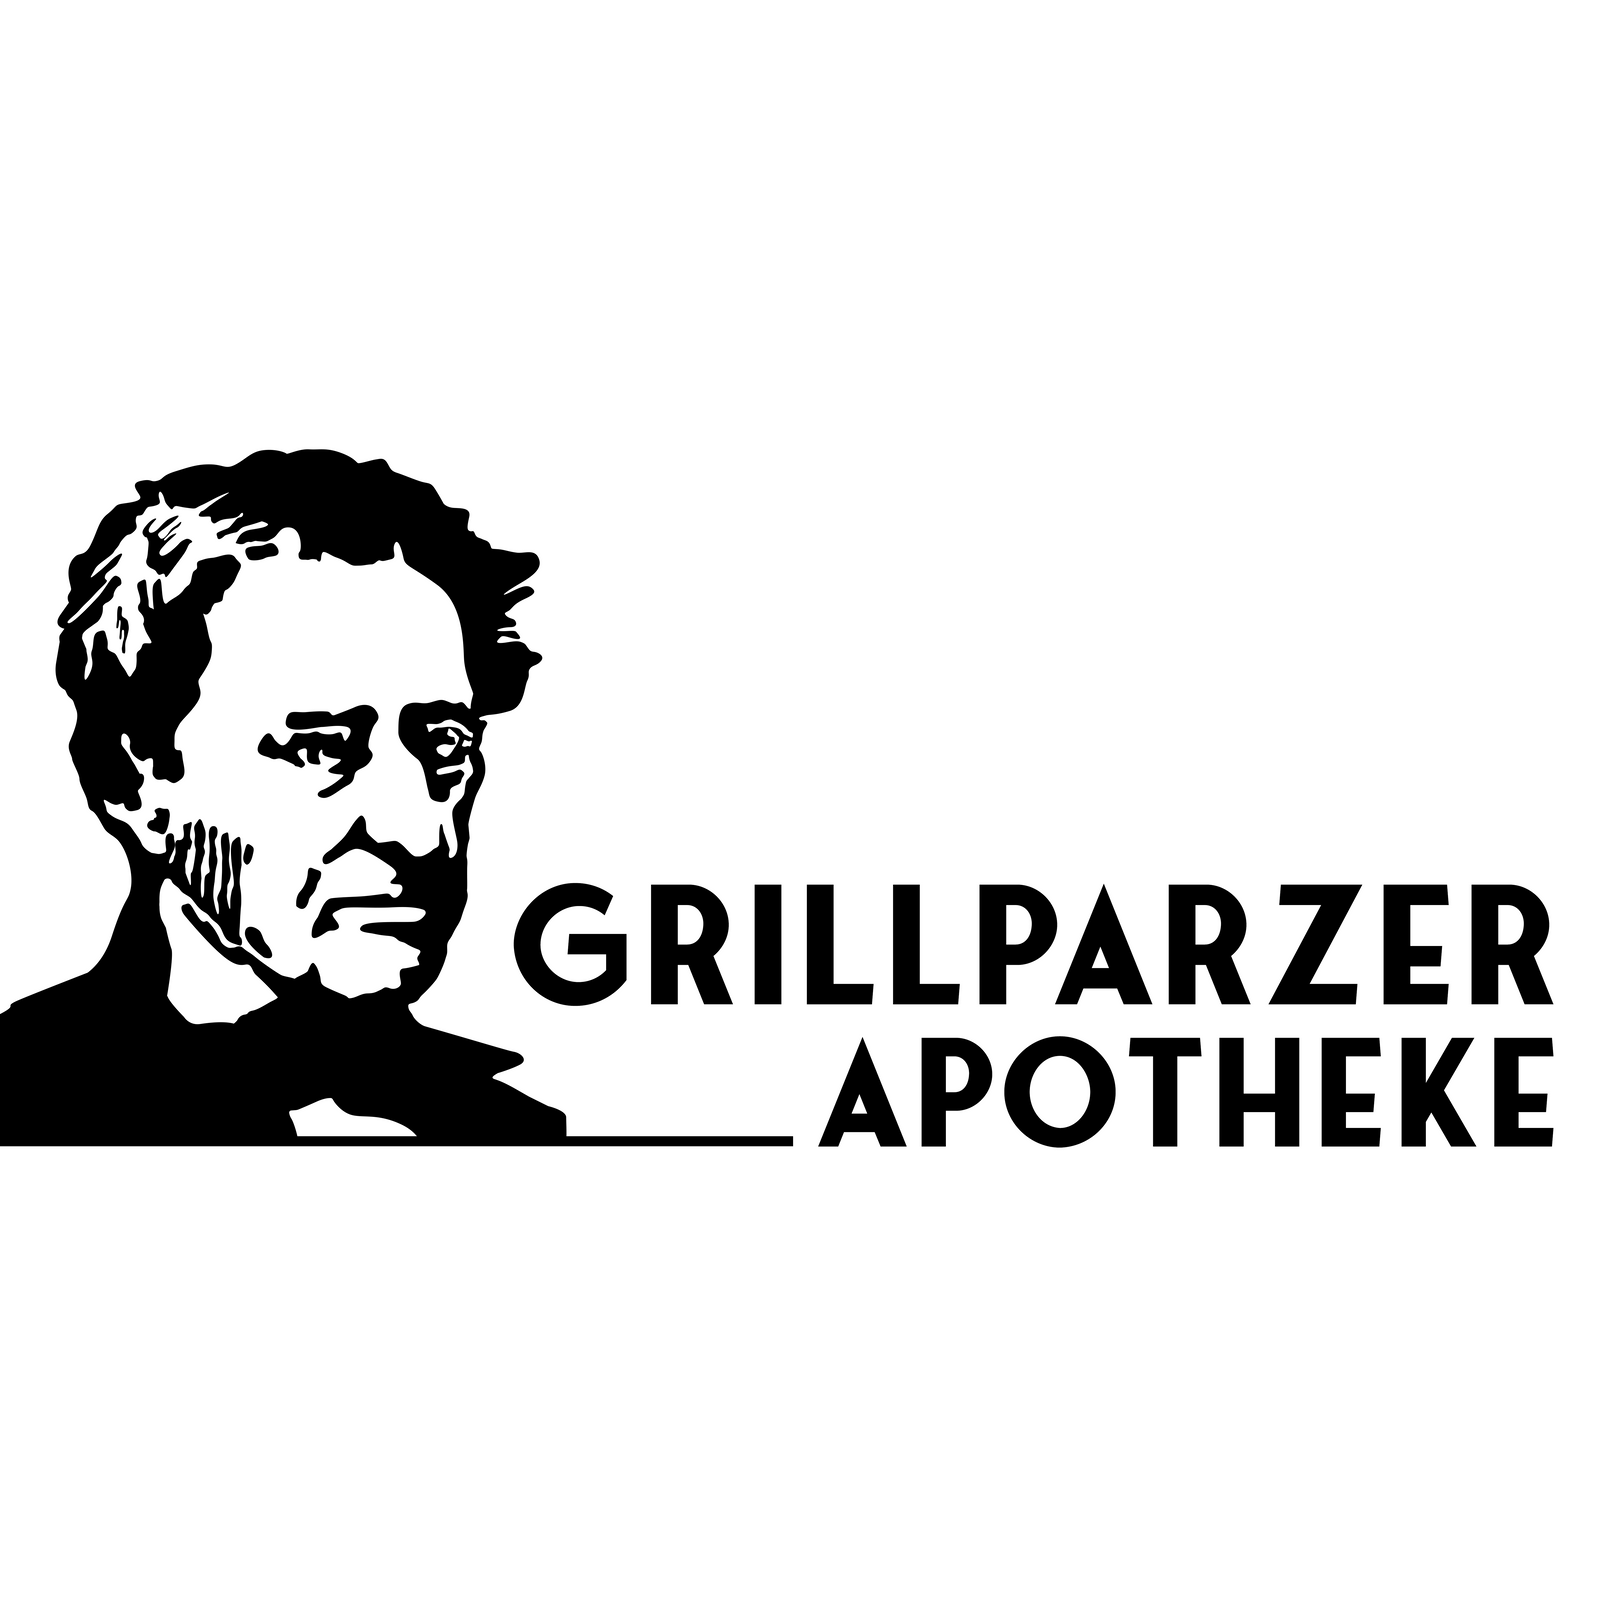 Grillparzer Apotheke in München - Logo